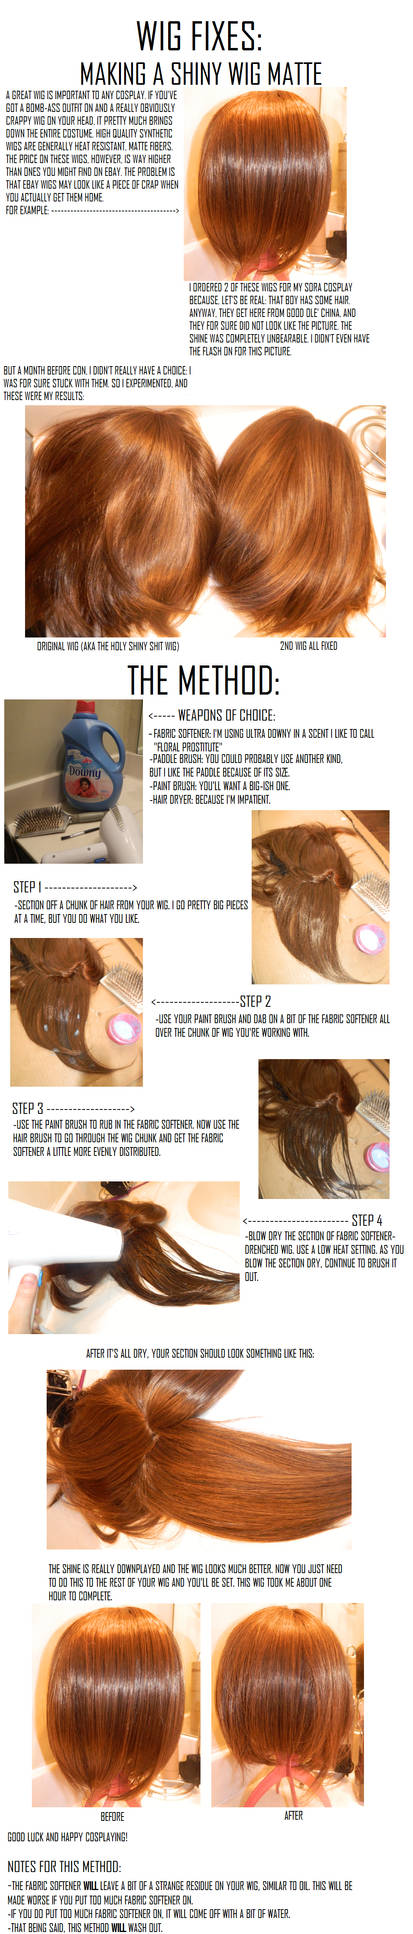 Cosplay Wigs: Taking away wig shine